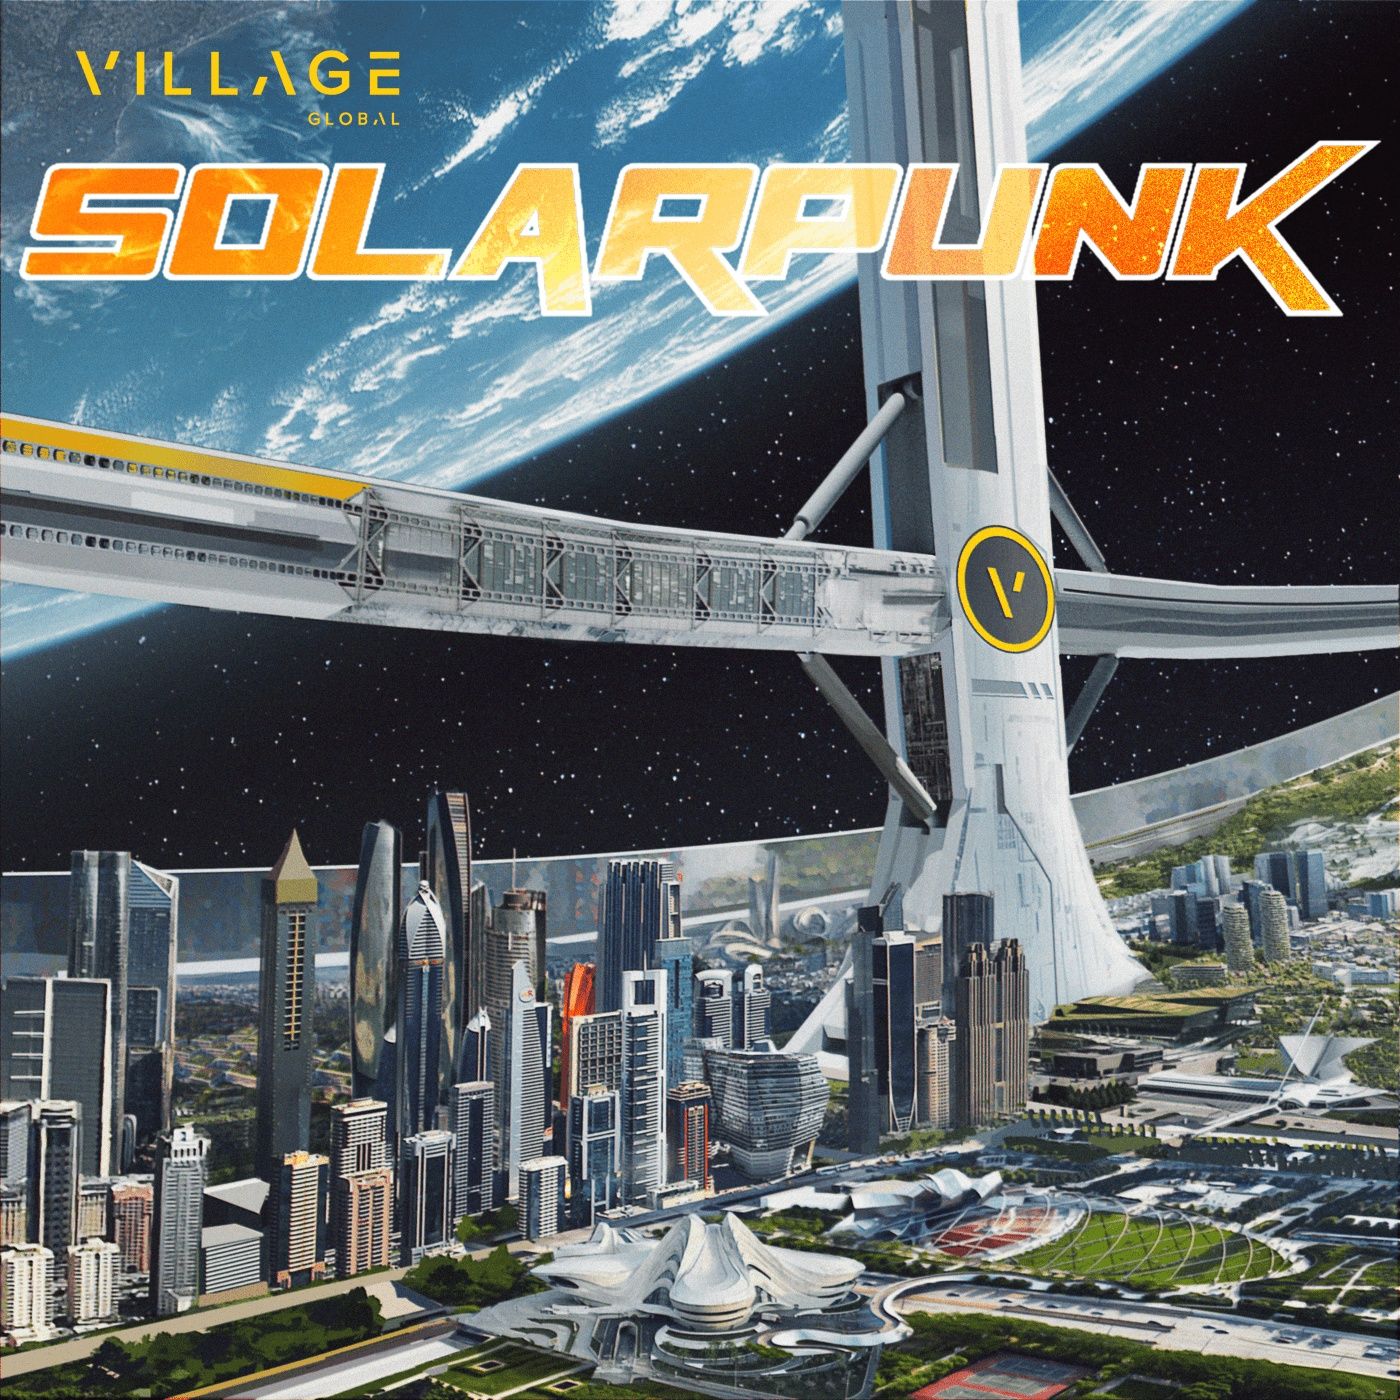 Village Global’s Solarpunk